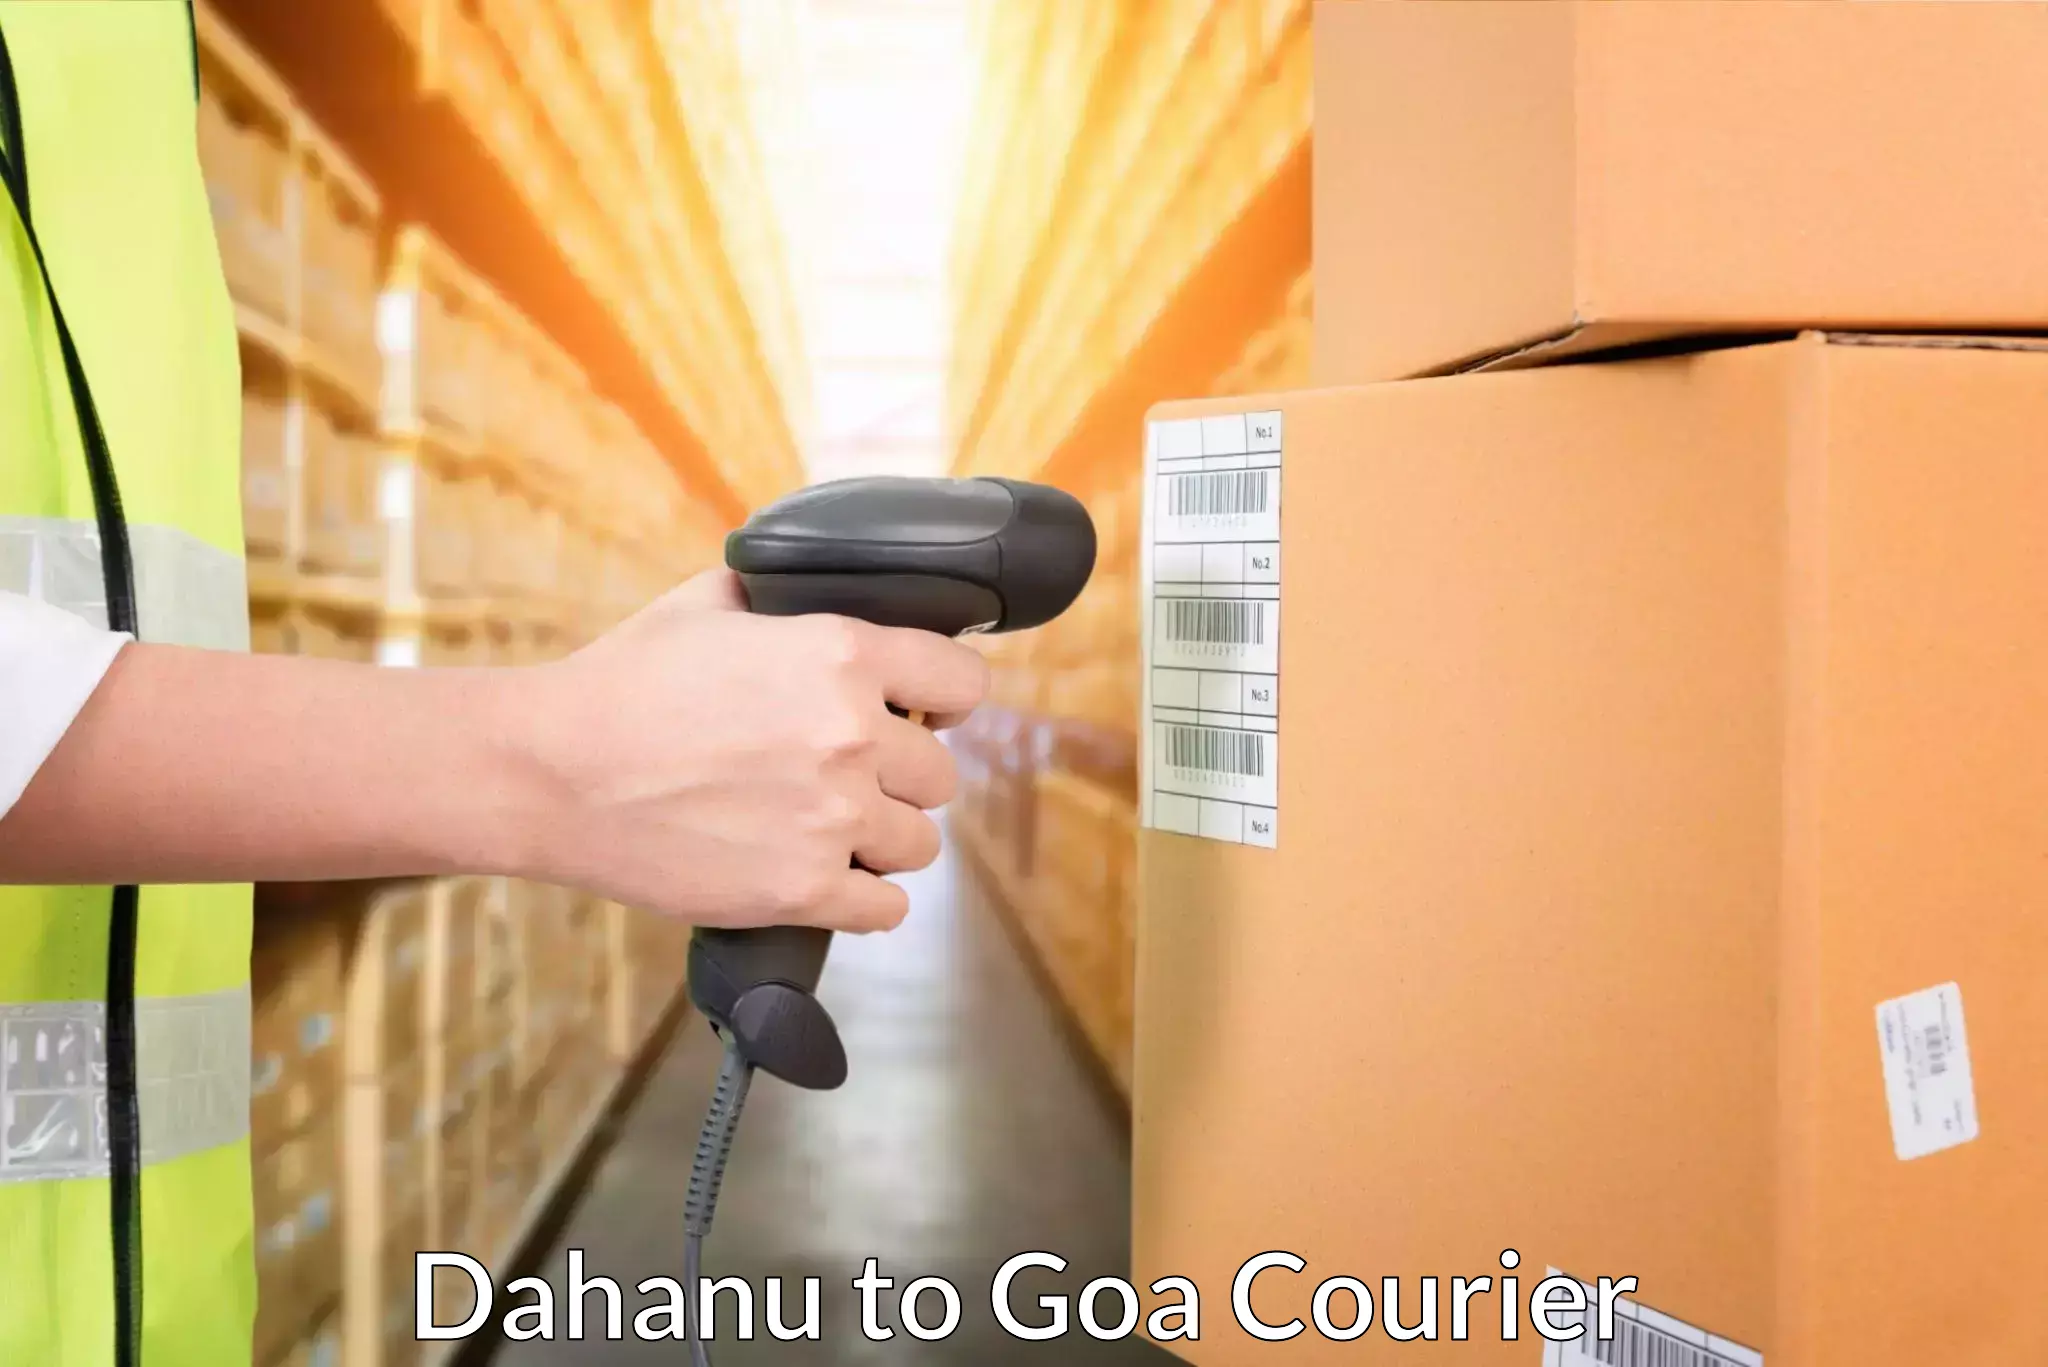 End-to-end delivery Dahanu to Vasco da Gama